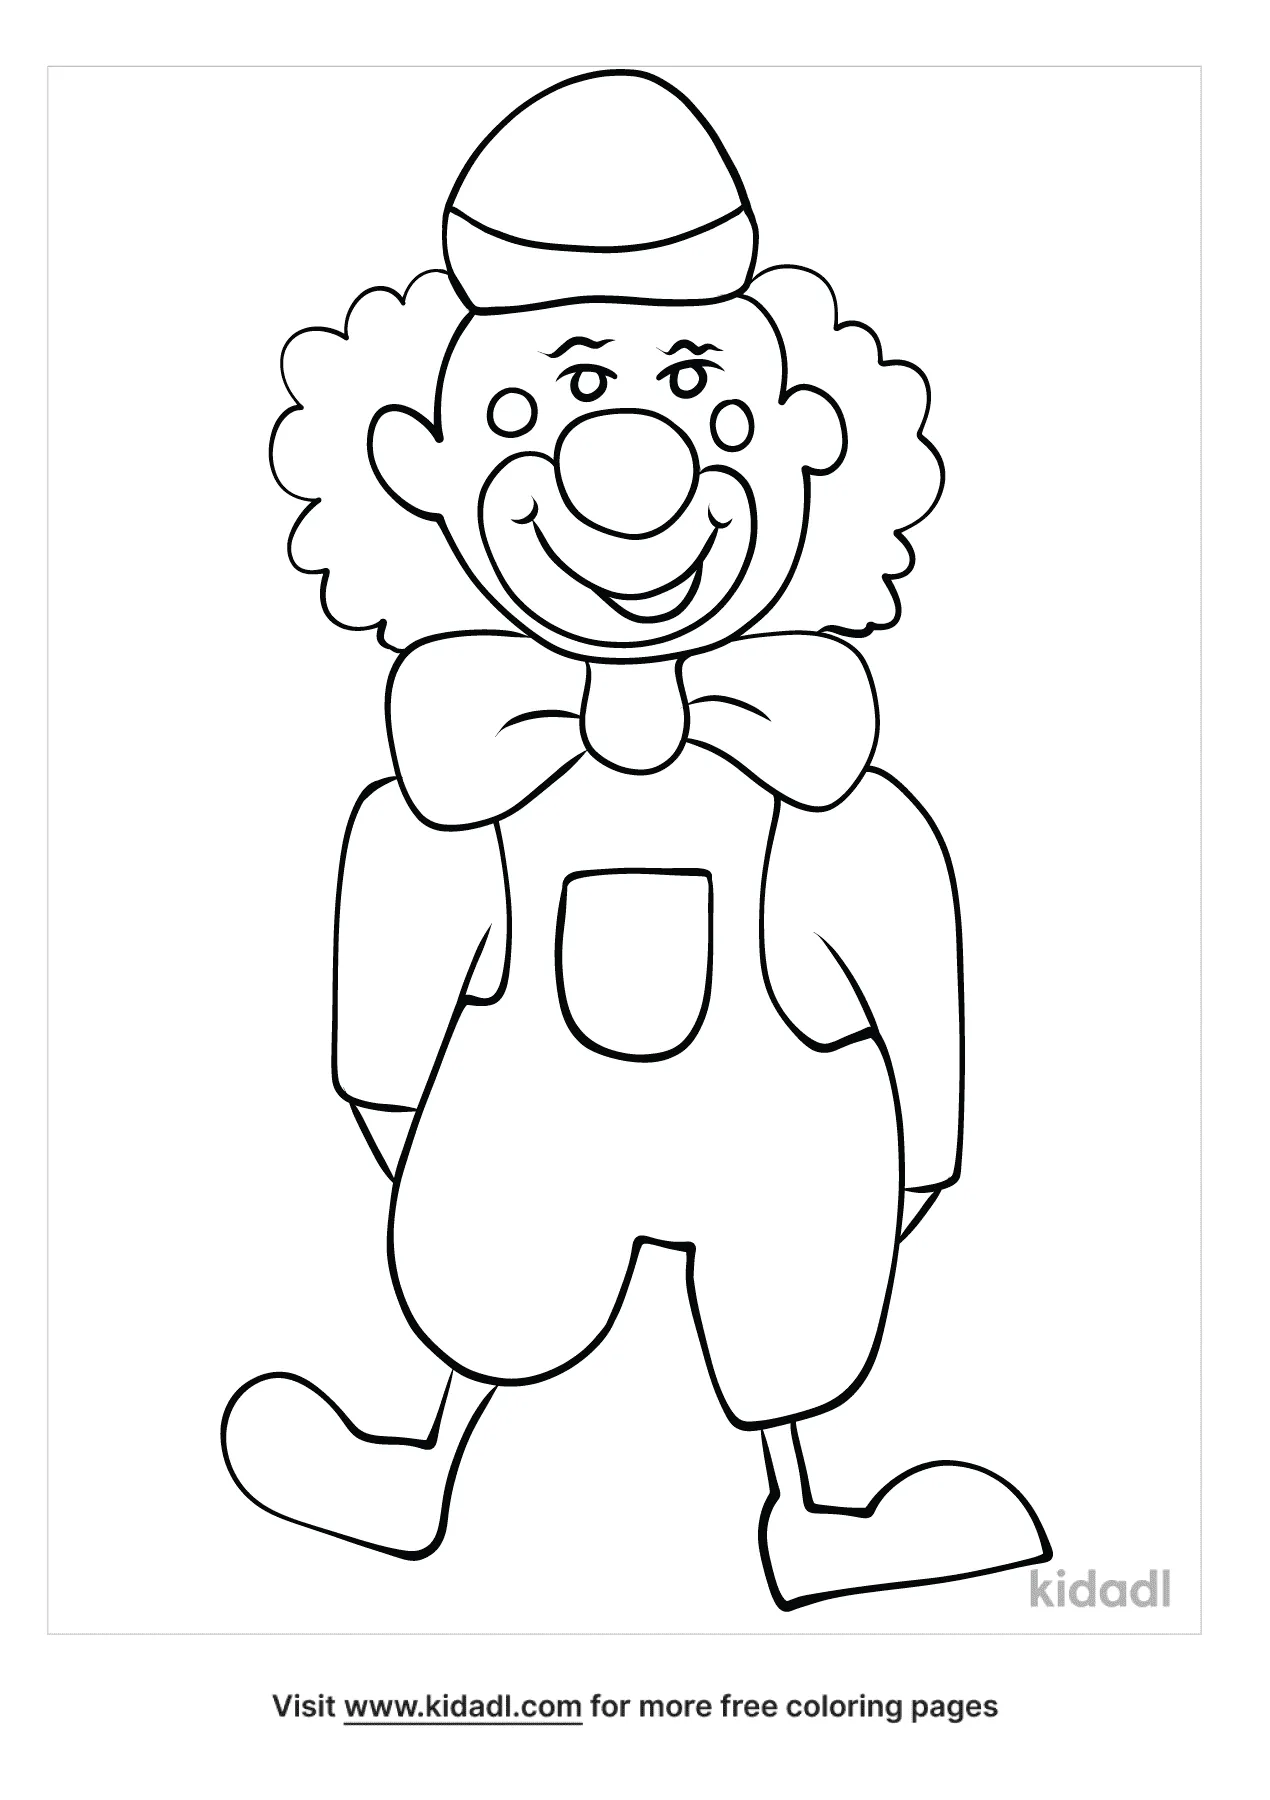 Free Clown Cartoon Coloring Page | Coloring Page Printables | Kidadl